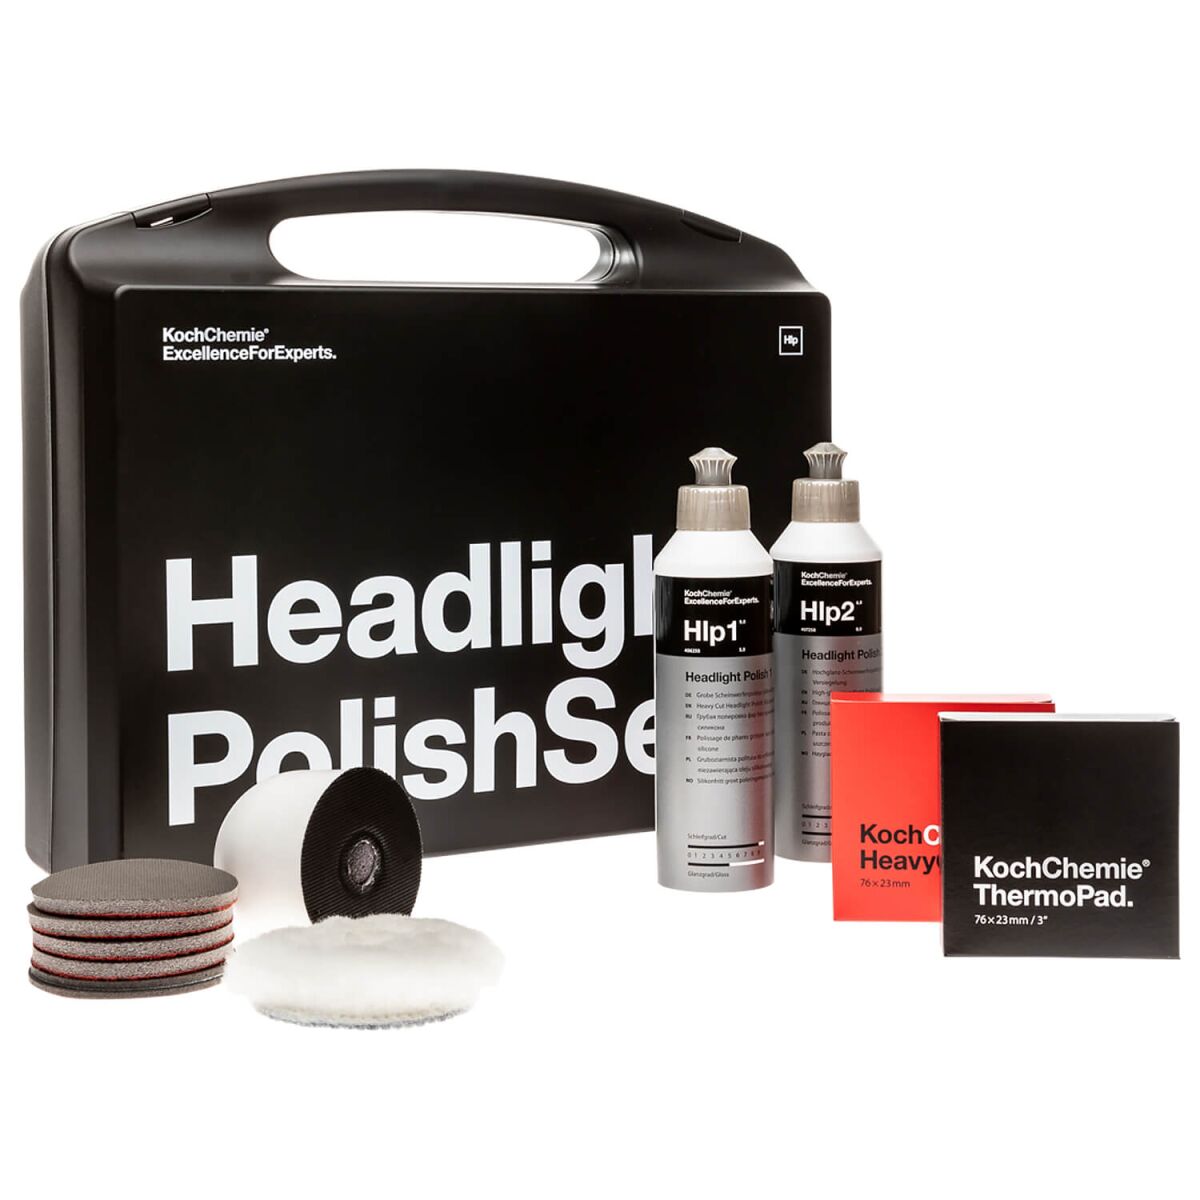 https://www.waschguru.de/media/image/product/10060/lg/koch-chemie-headlight-polish-scheinwerfer-aufbereitungsset.jpg